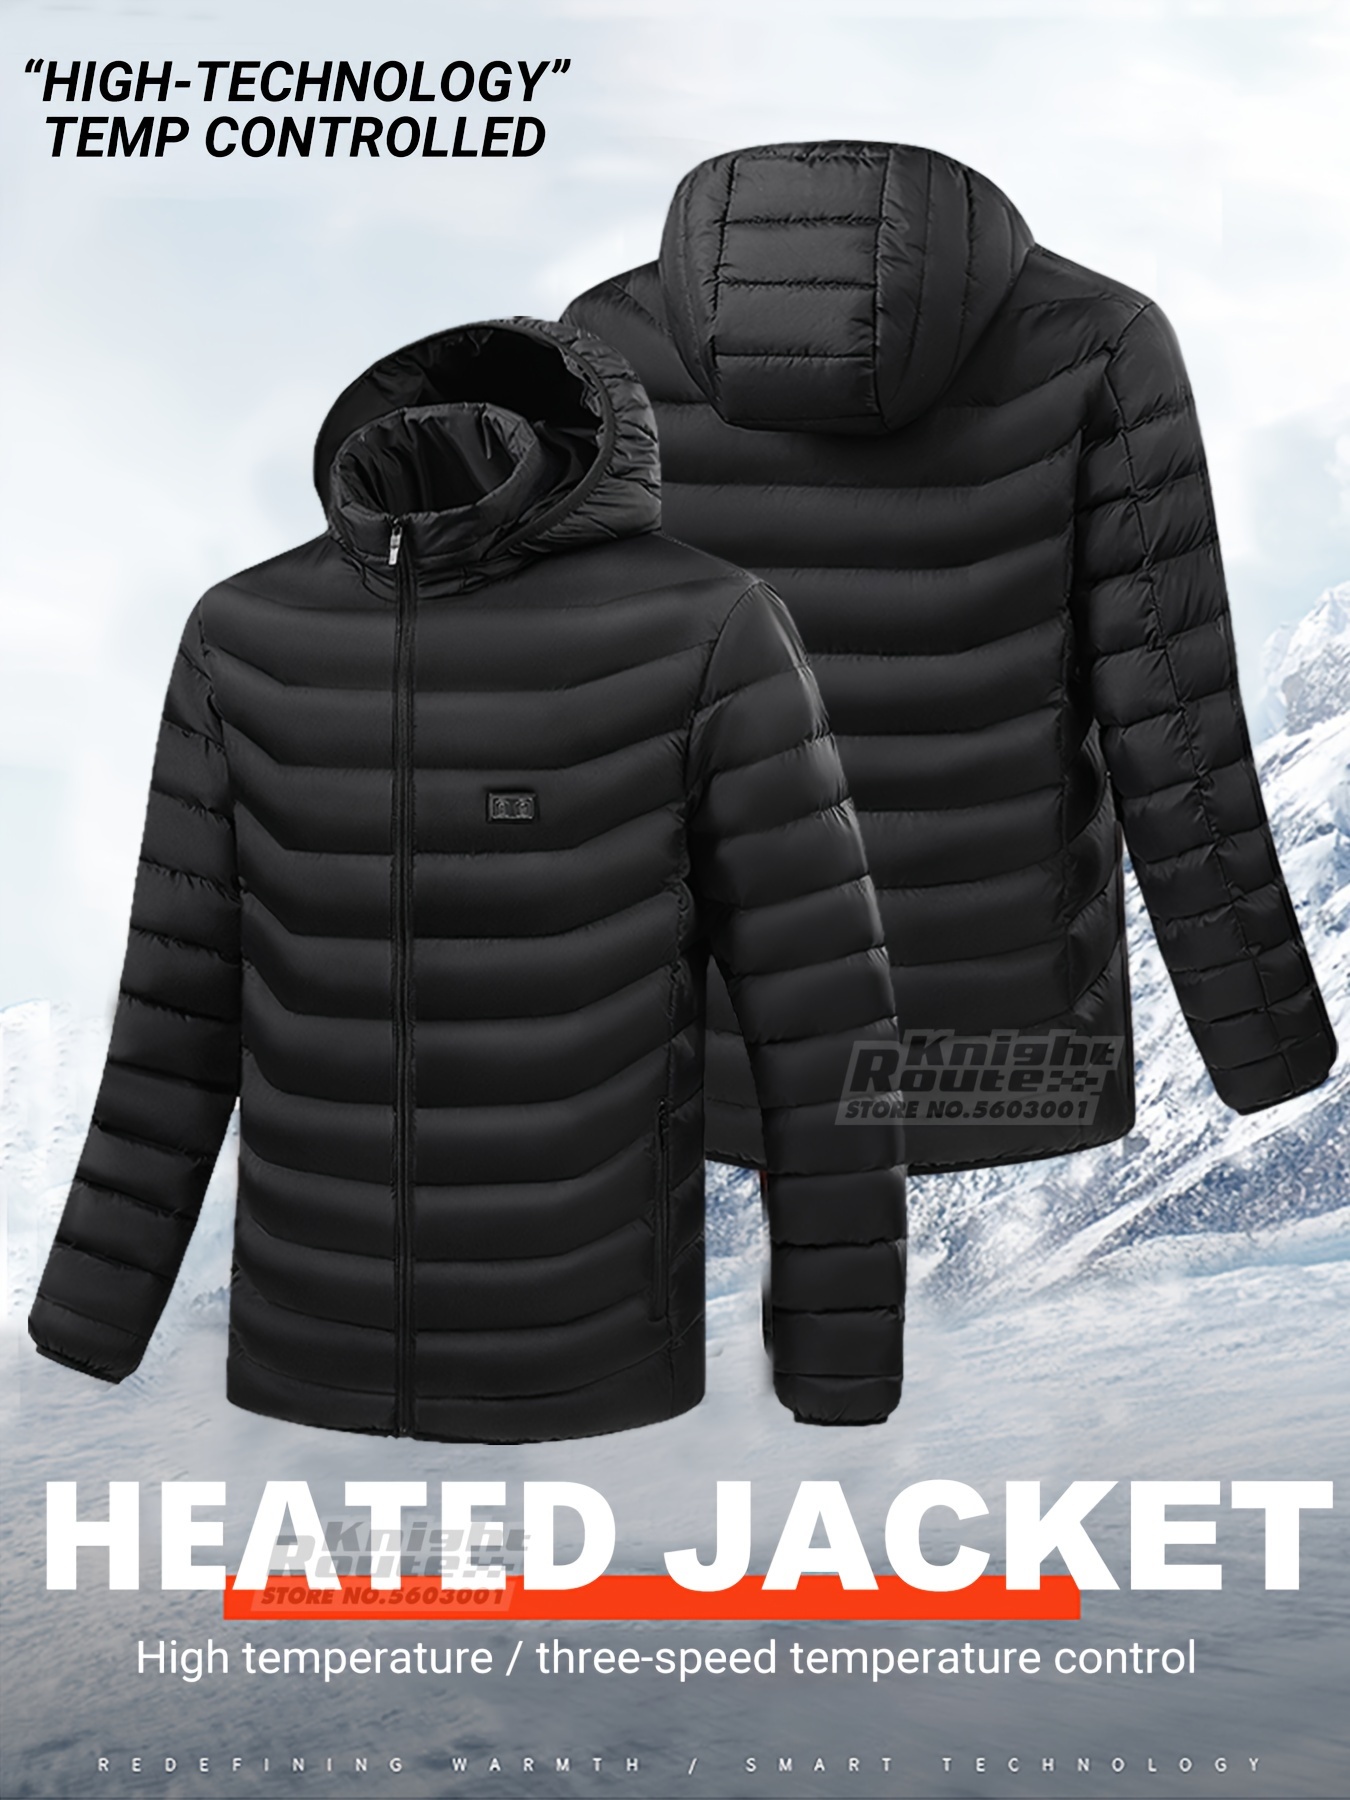 Veste de chasse chauffante  Hiking jacket, Types of jackets, Mens